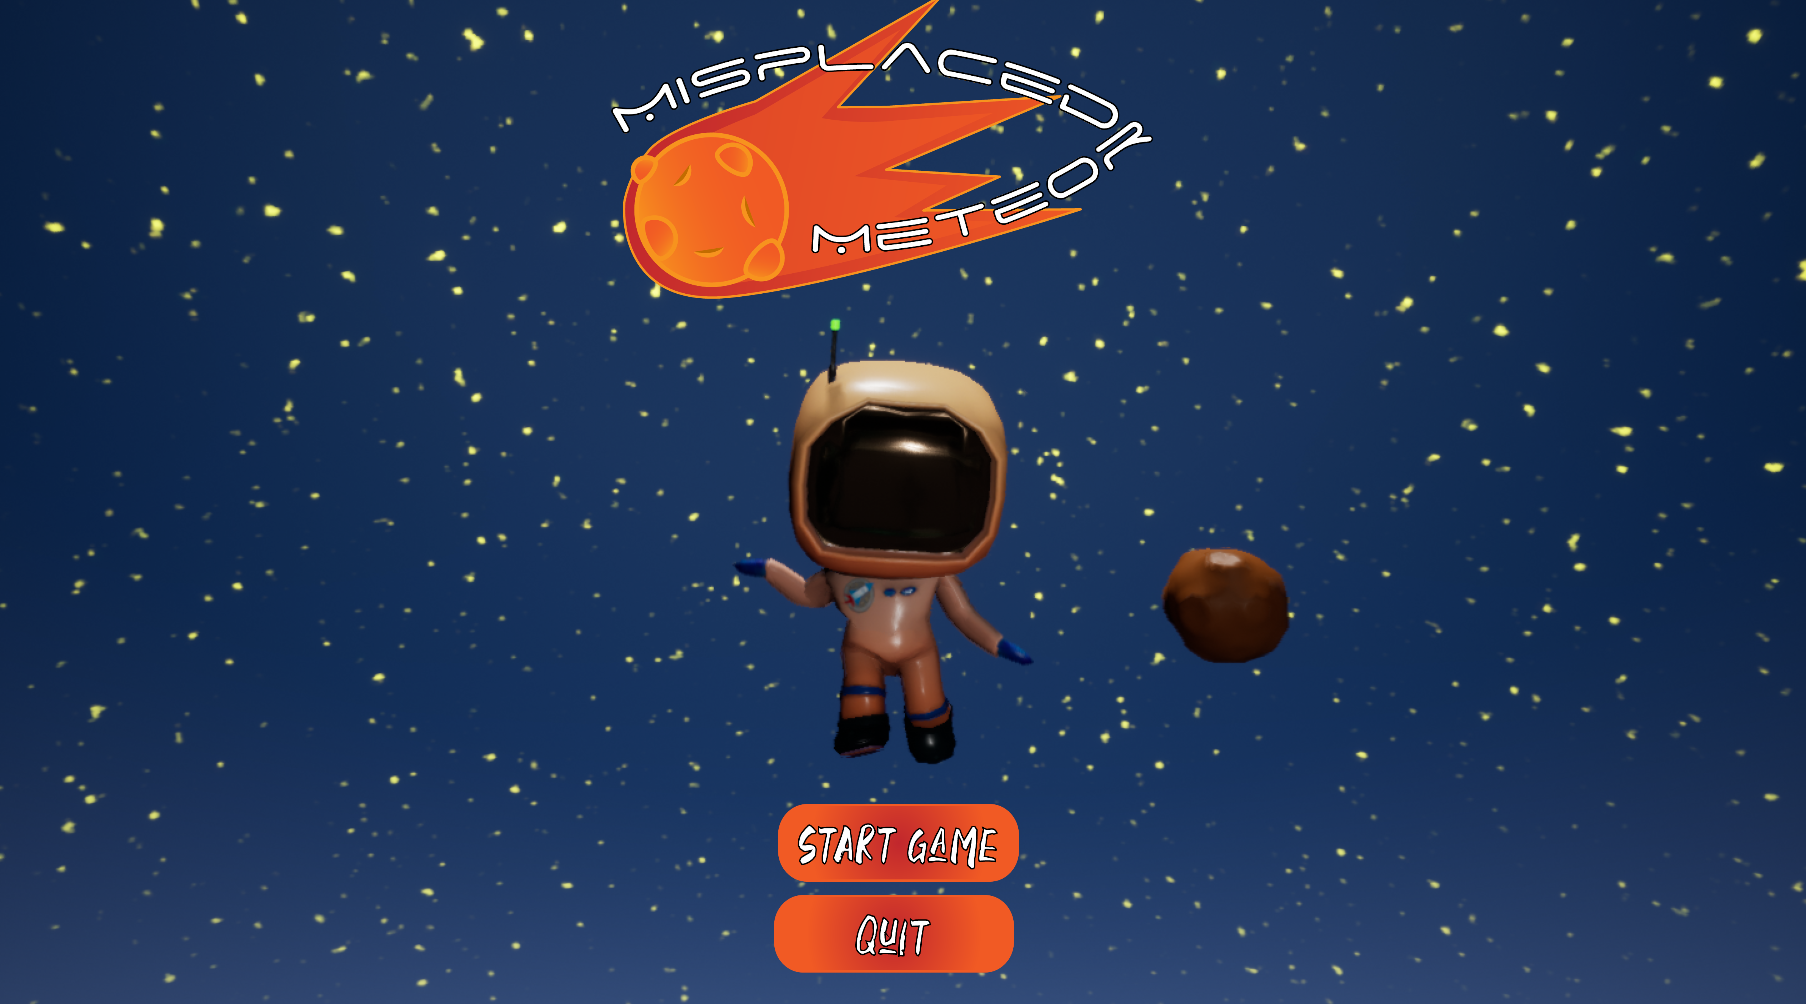 Astro - Misplaced Meteor